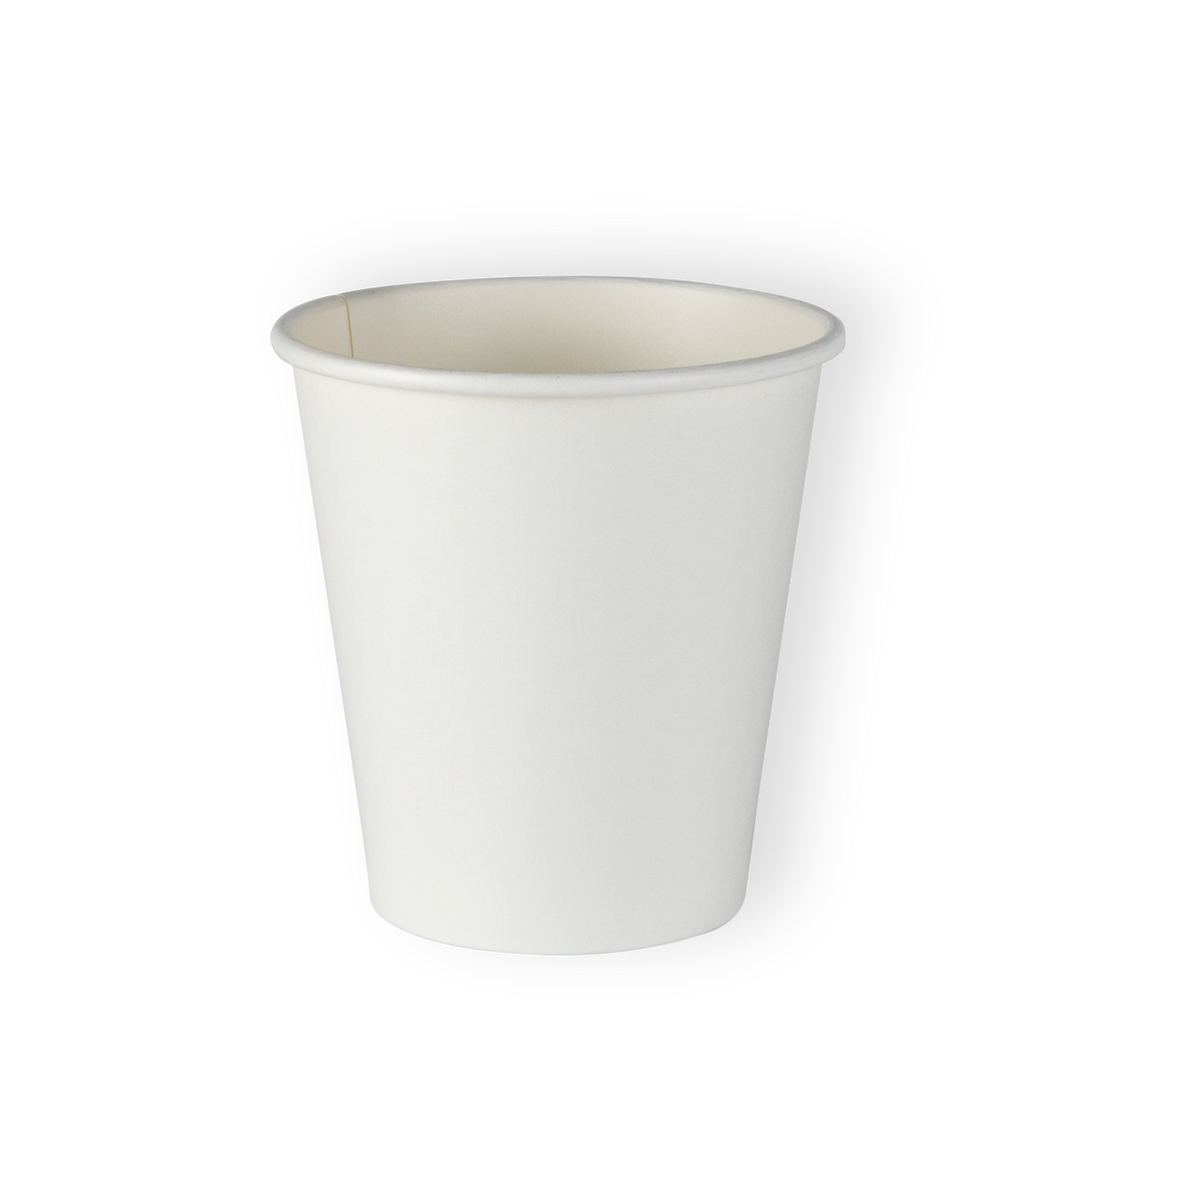 Vaso de café blanco Beeco 8oz (240ml) - Beeco - Vasos compostables